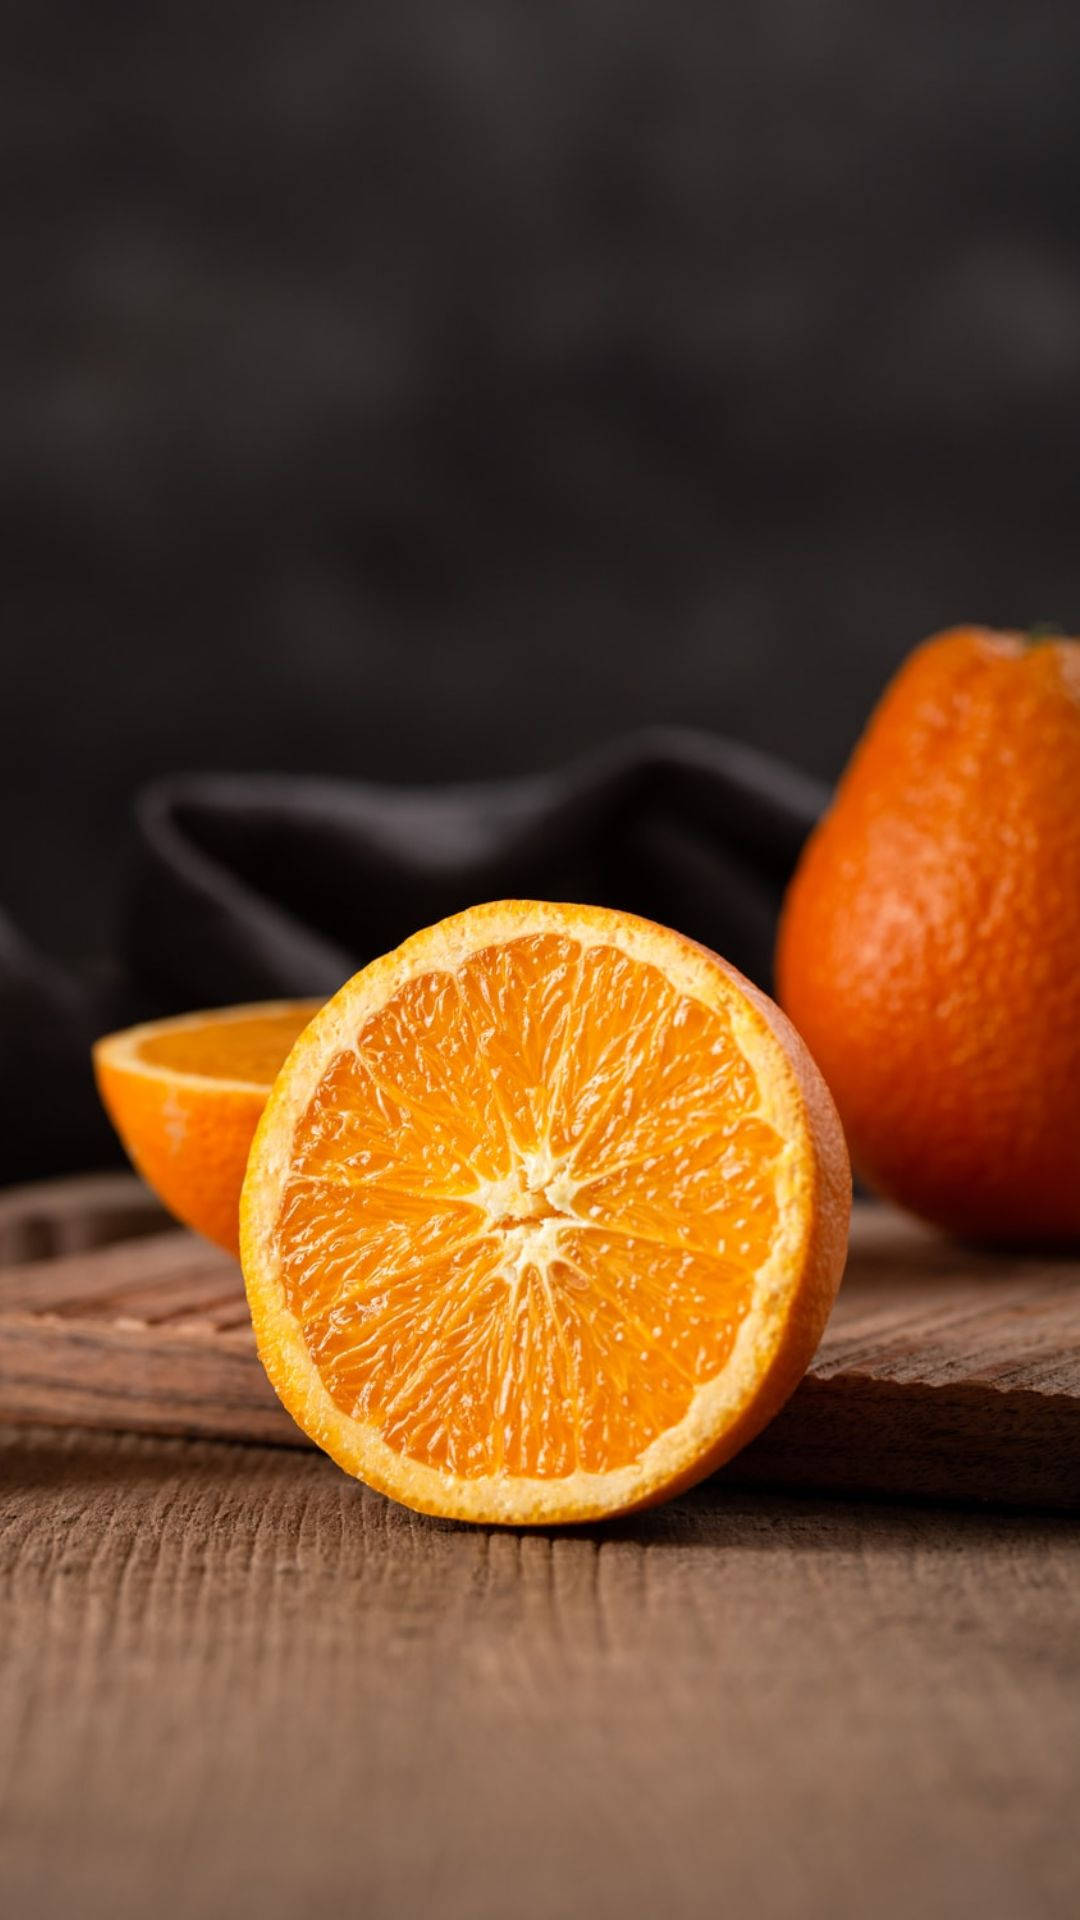 Freshly Sliced Orange On A Wooden Surface